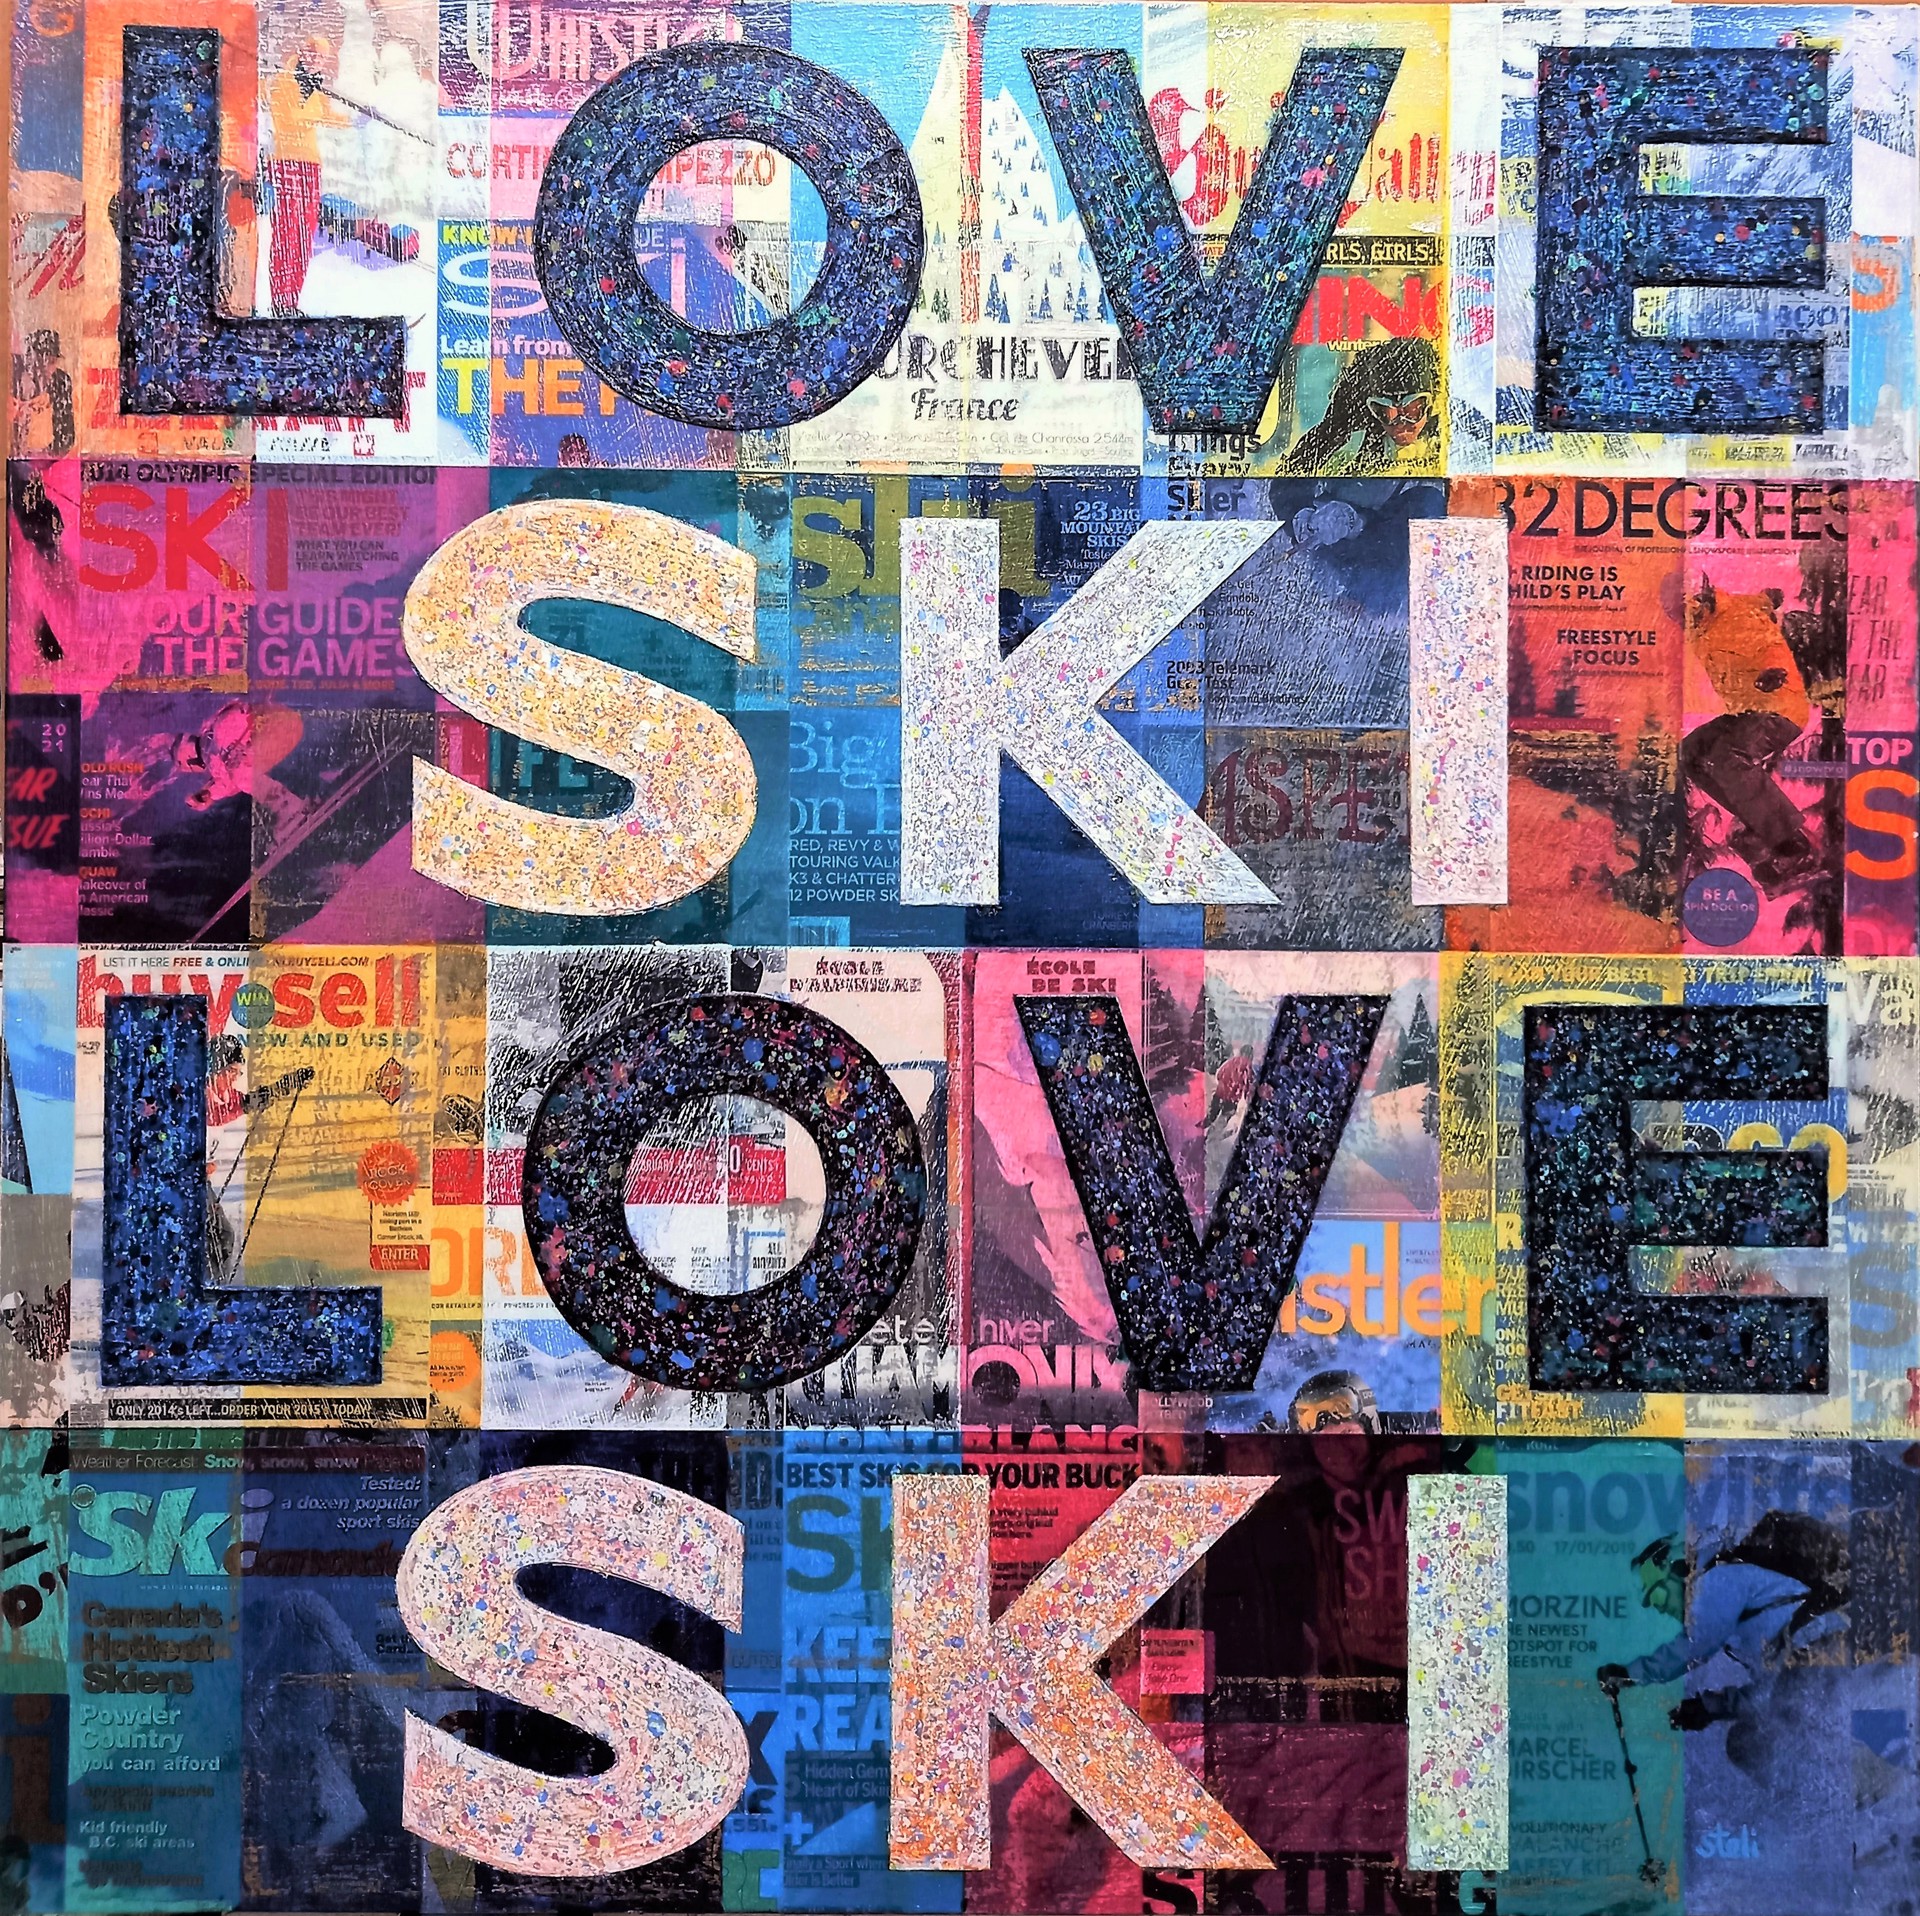 When you Love Ski 1 by Steli Christoff